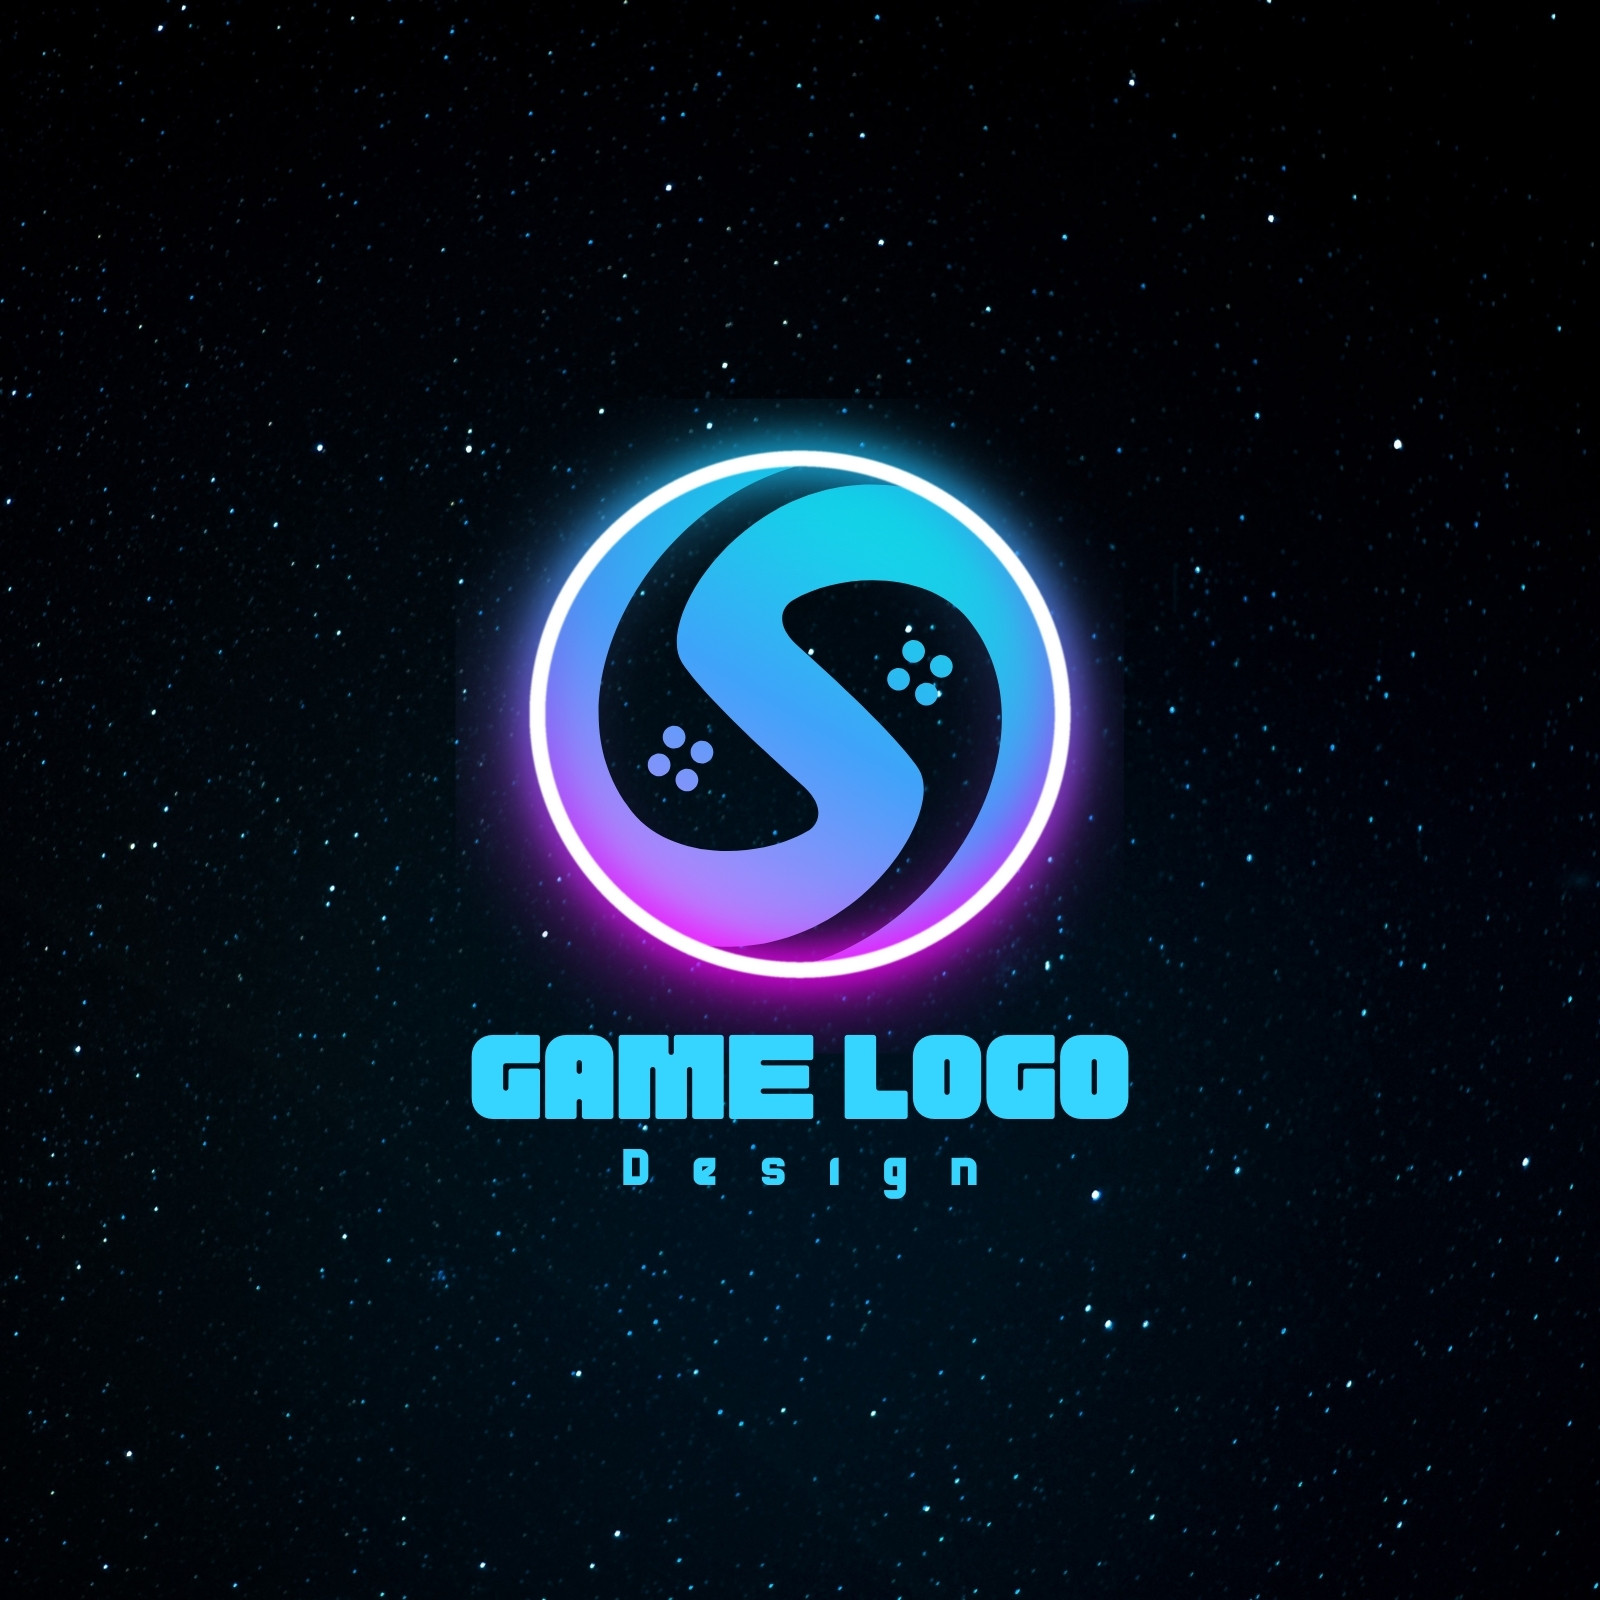 GAM Logo PNG Vector (EPS) Free Download